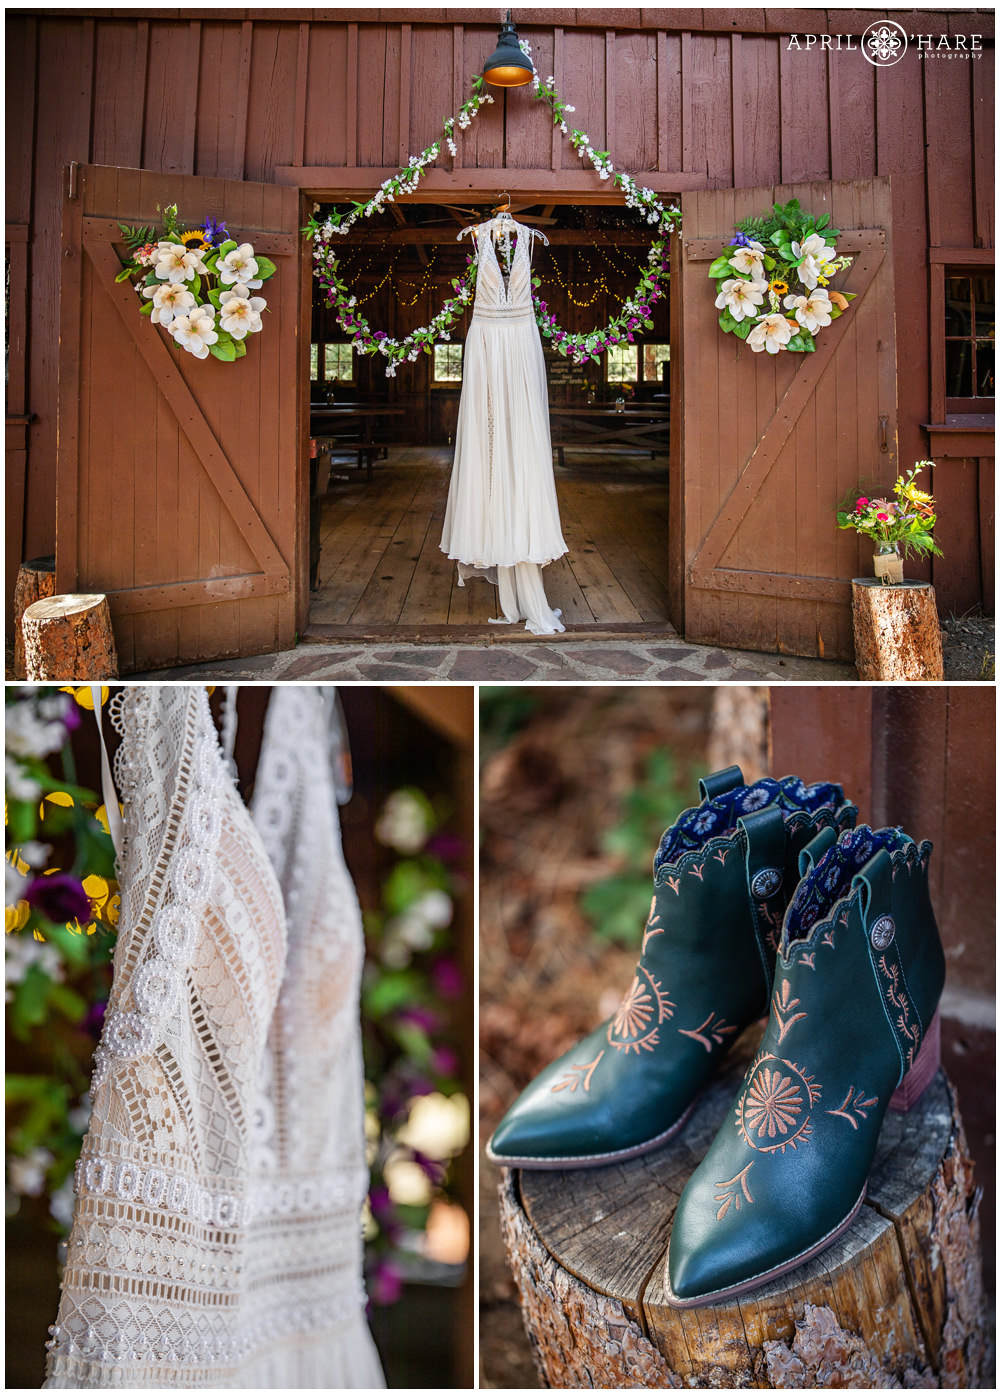 Bride's dress and shoe details at a rustic Colorado wedding